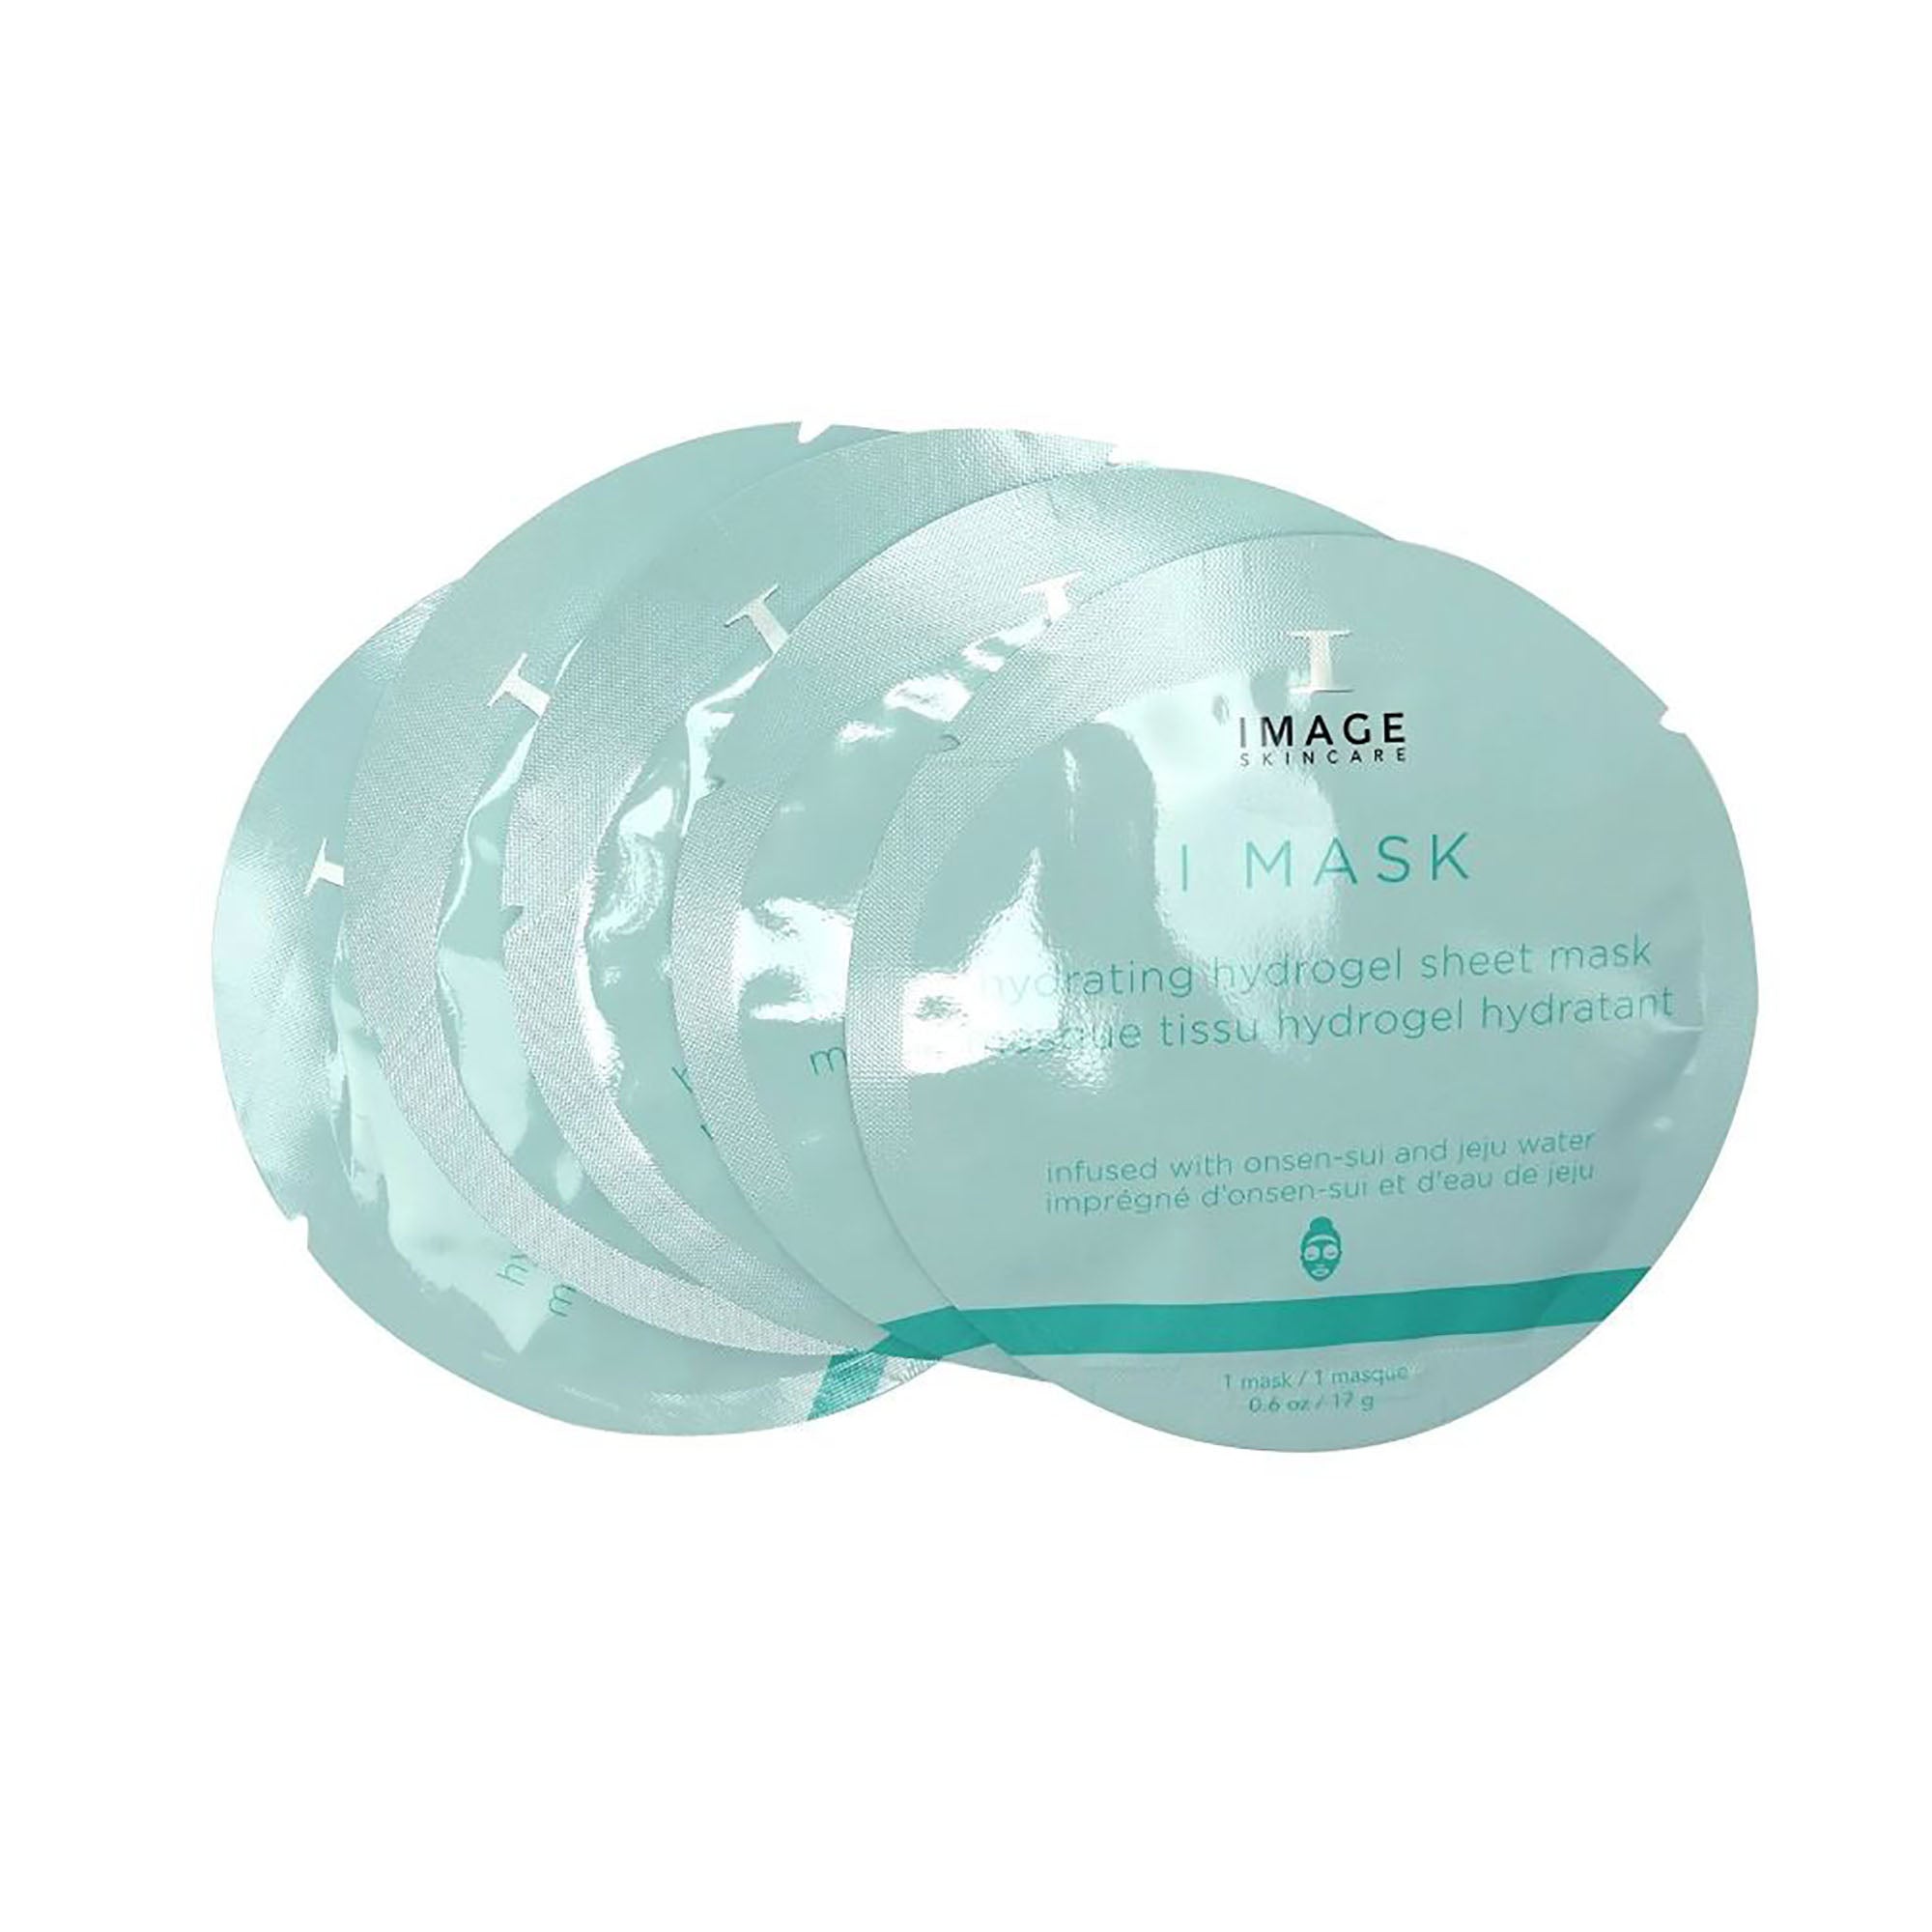 Image Skincare I MASK Hydrating Hydrogel Sheet Masks - 5 pack / 5PK